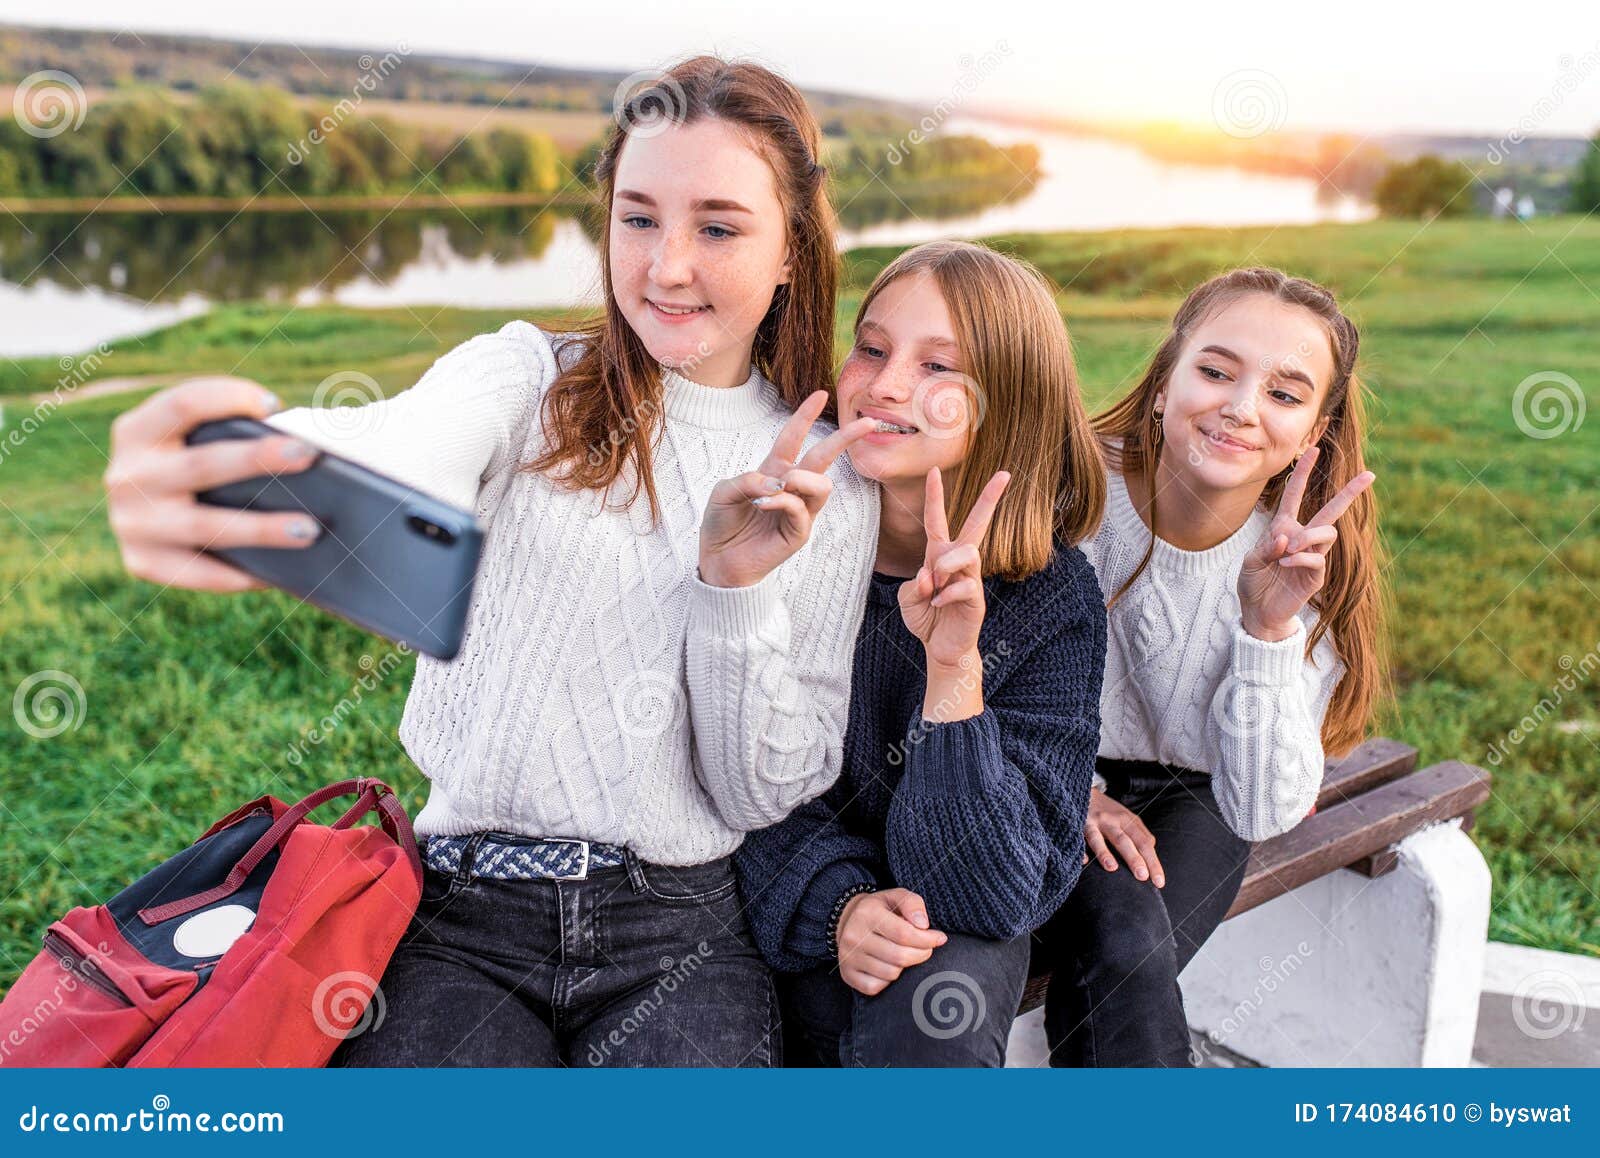 3 Girls Teenagers 12 13 14 Years, Summer , Holding Smartphone ...